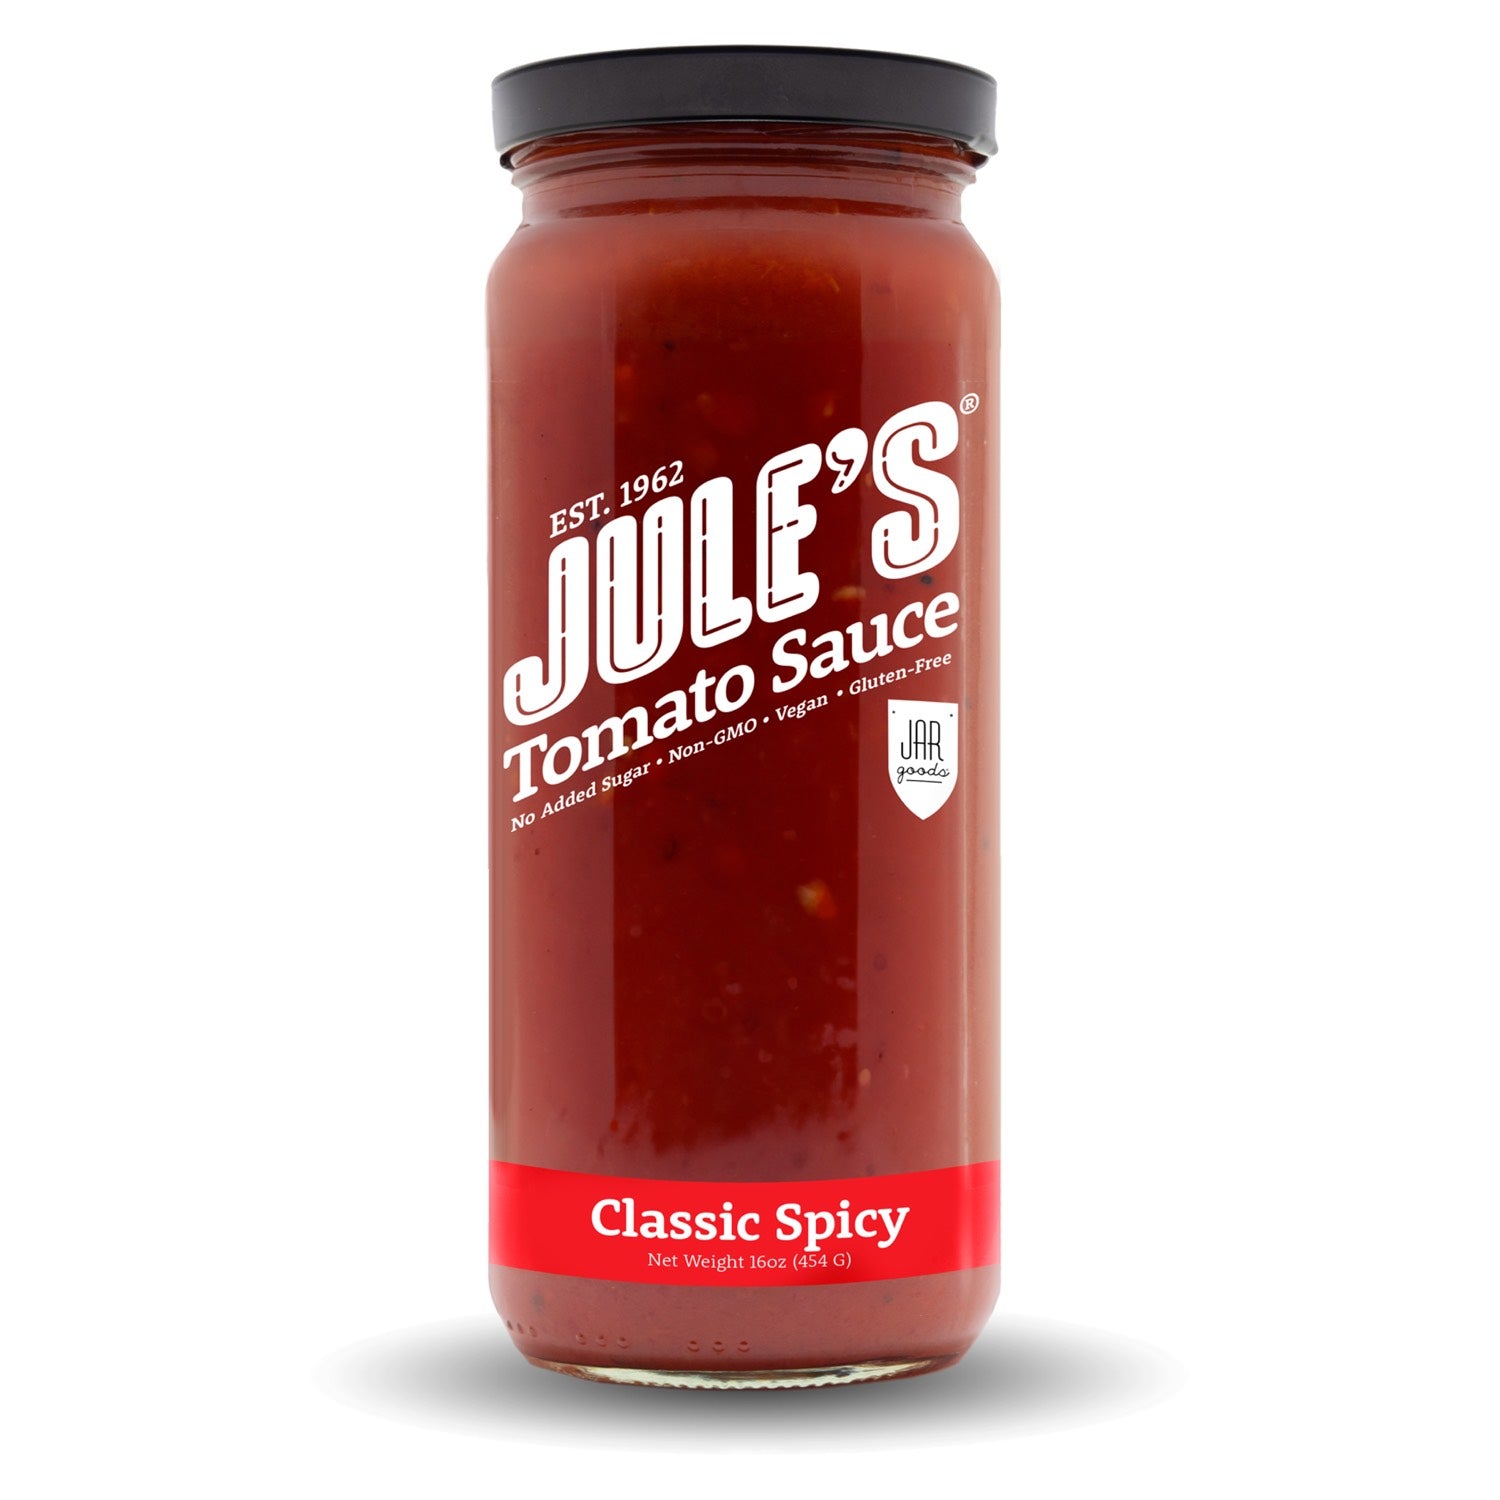 Classic Spicy Tomato Sauce